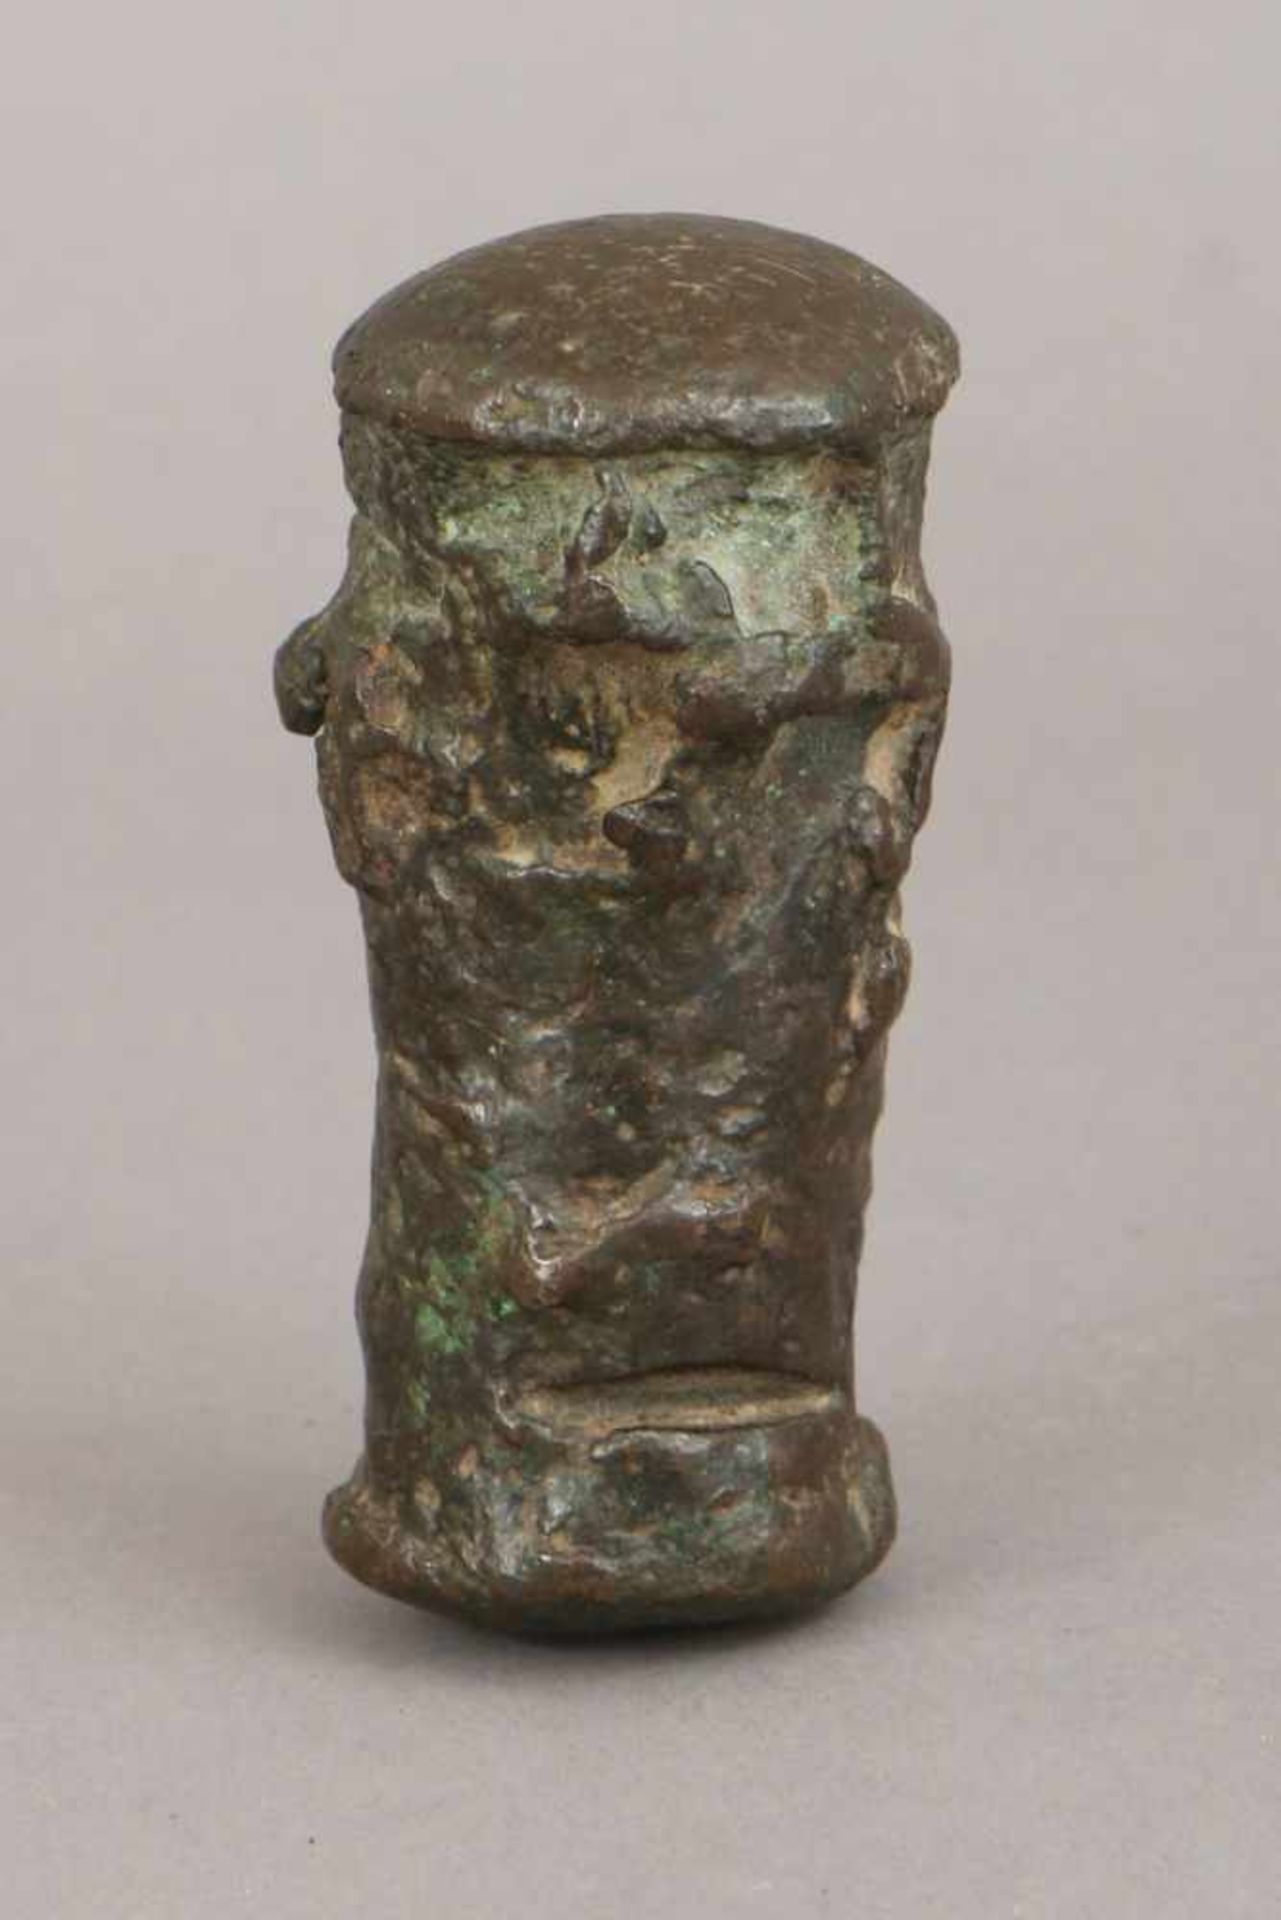 StößelBronze, wohl Guss des 16. Jhdts., zylindrische Form, H 10cm